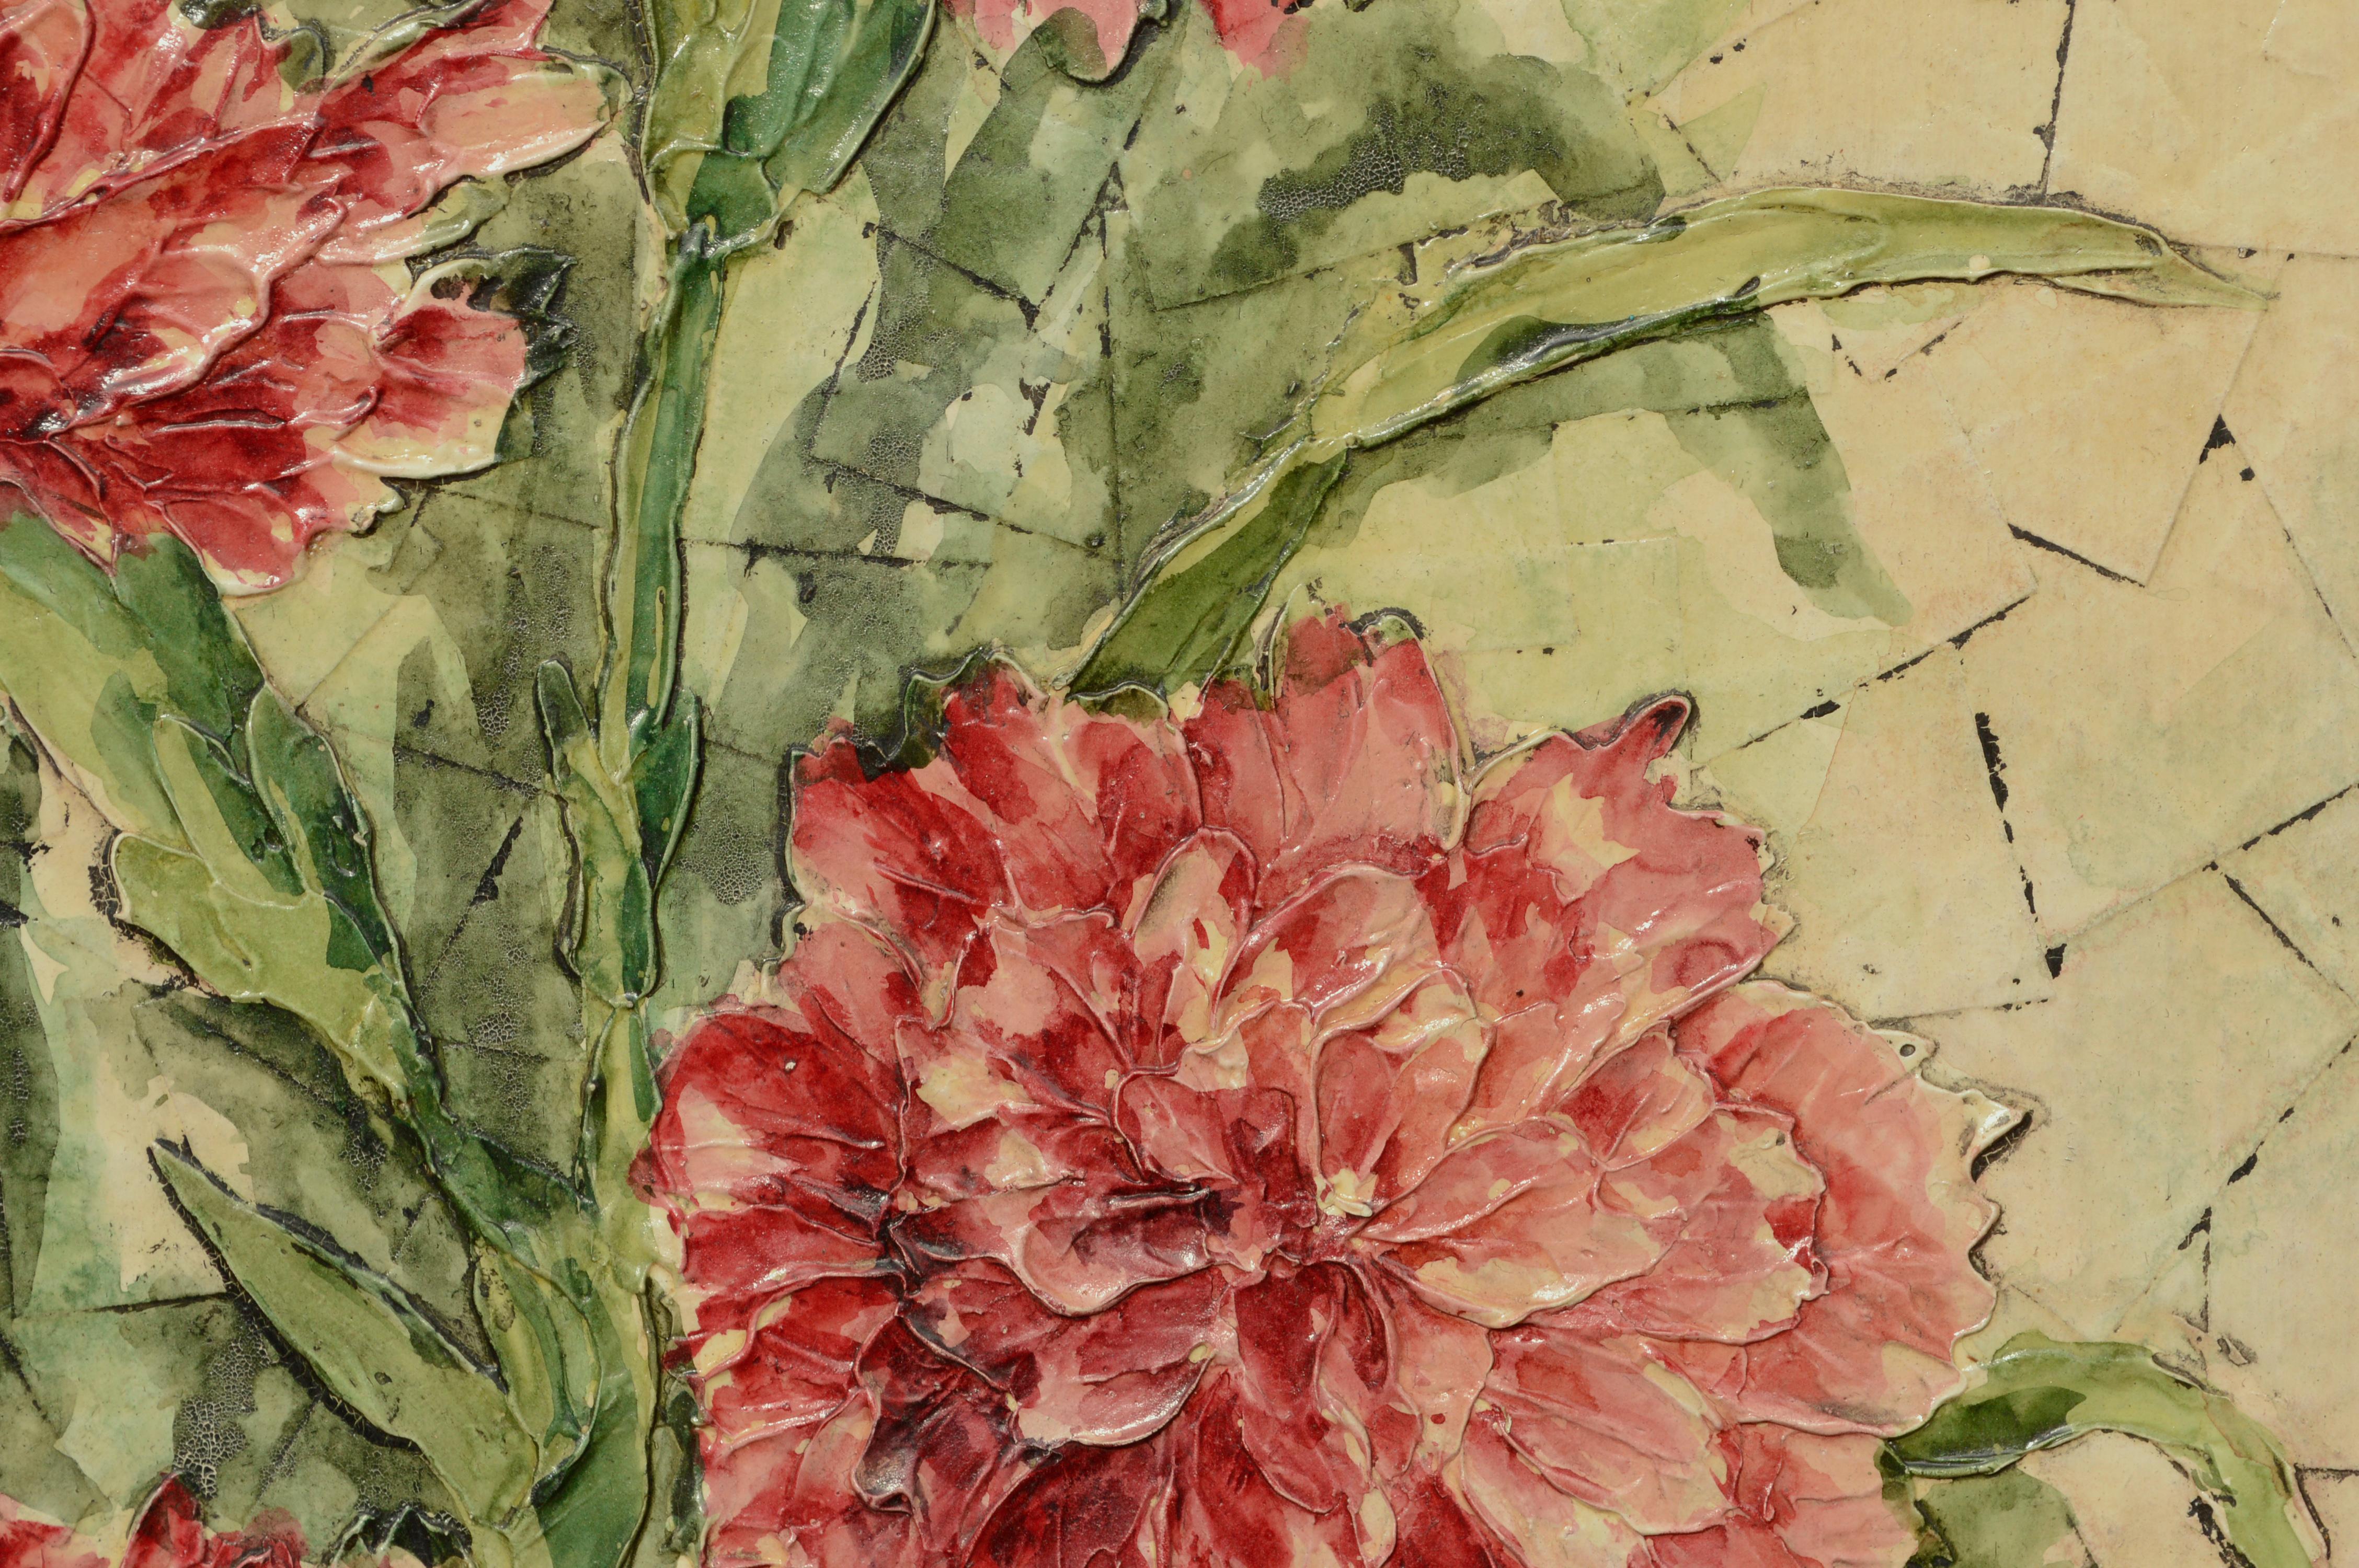 carnation flower painting